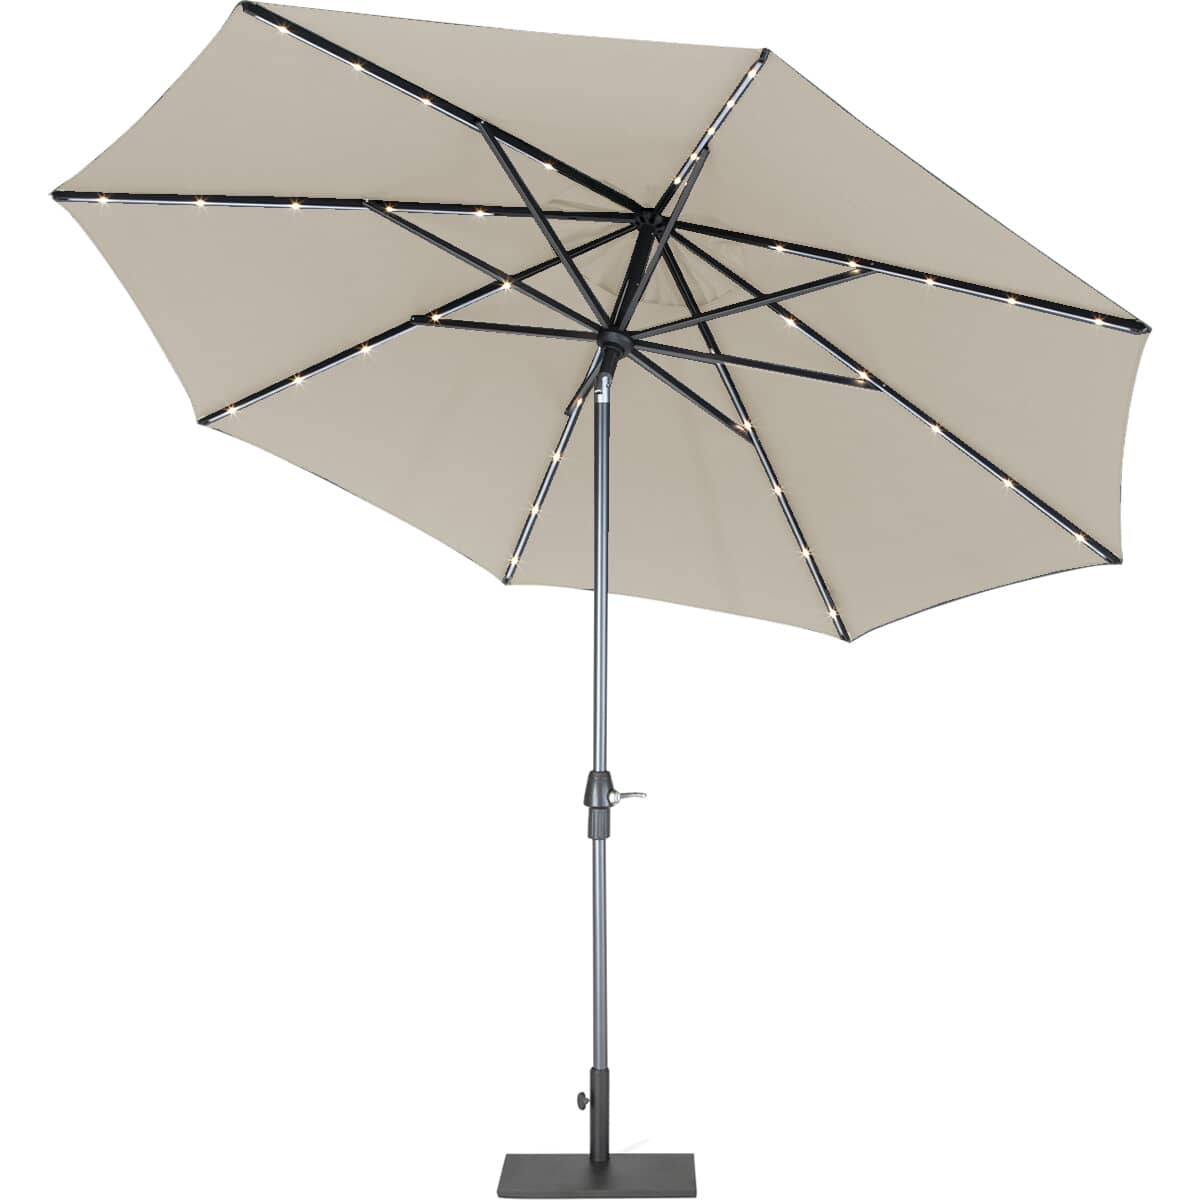 Kettler 3.0m Wind Up Parasol with tilt Grey frame and Slate Canopy 